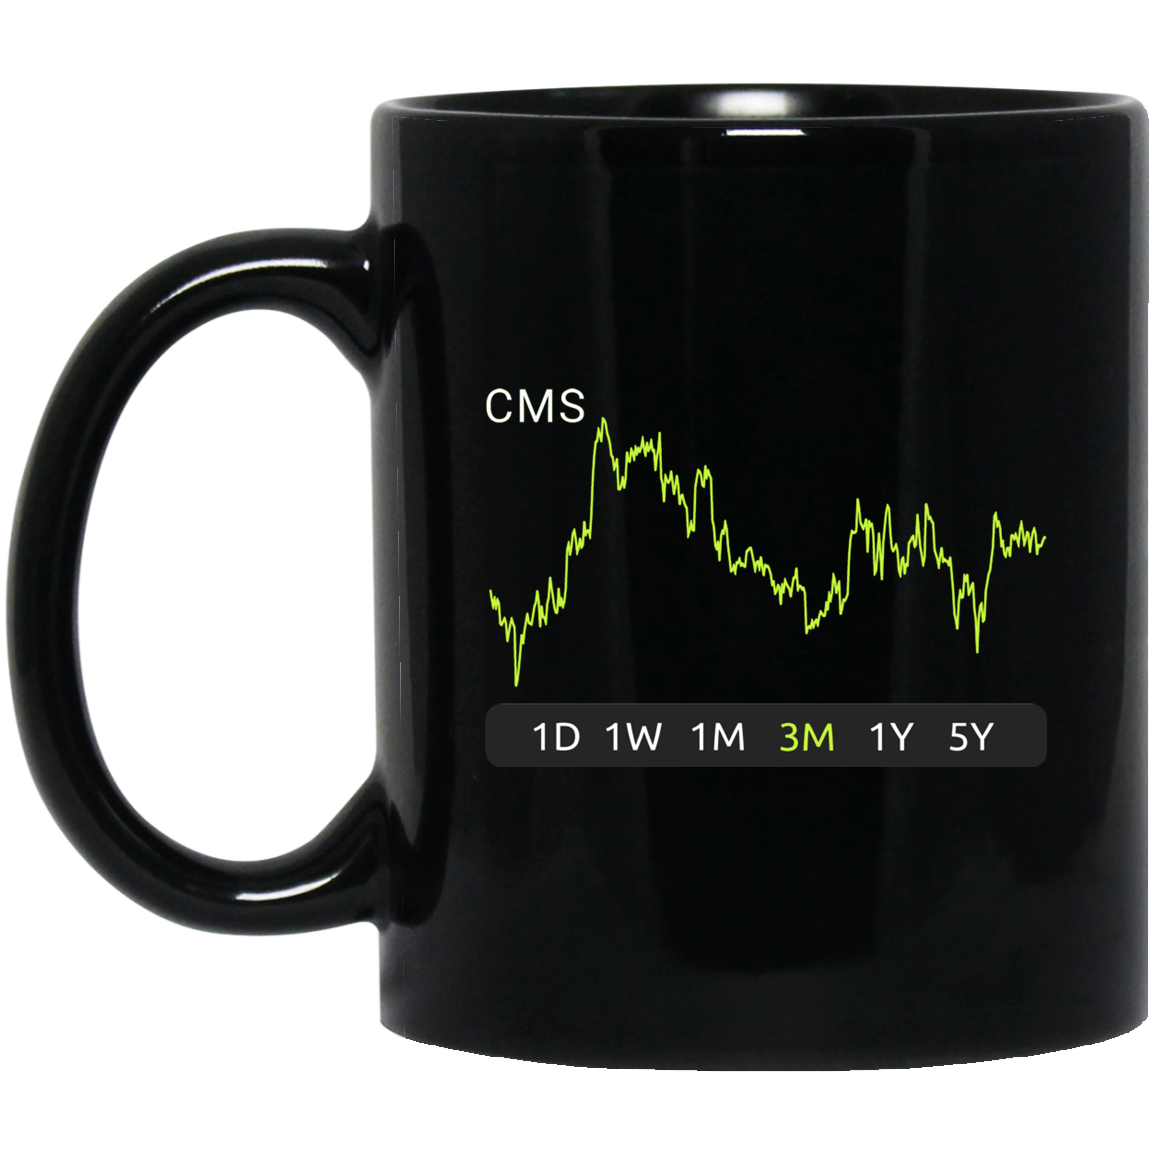 CMS Stock 3m Mug